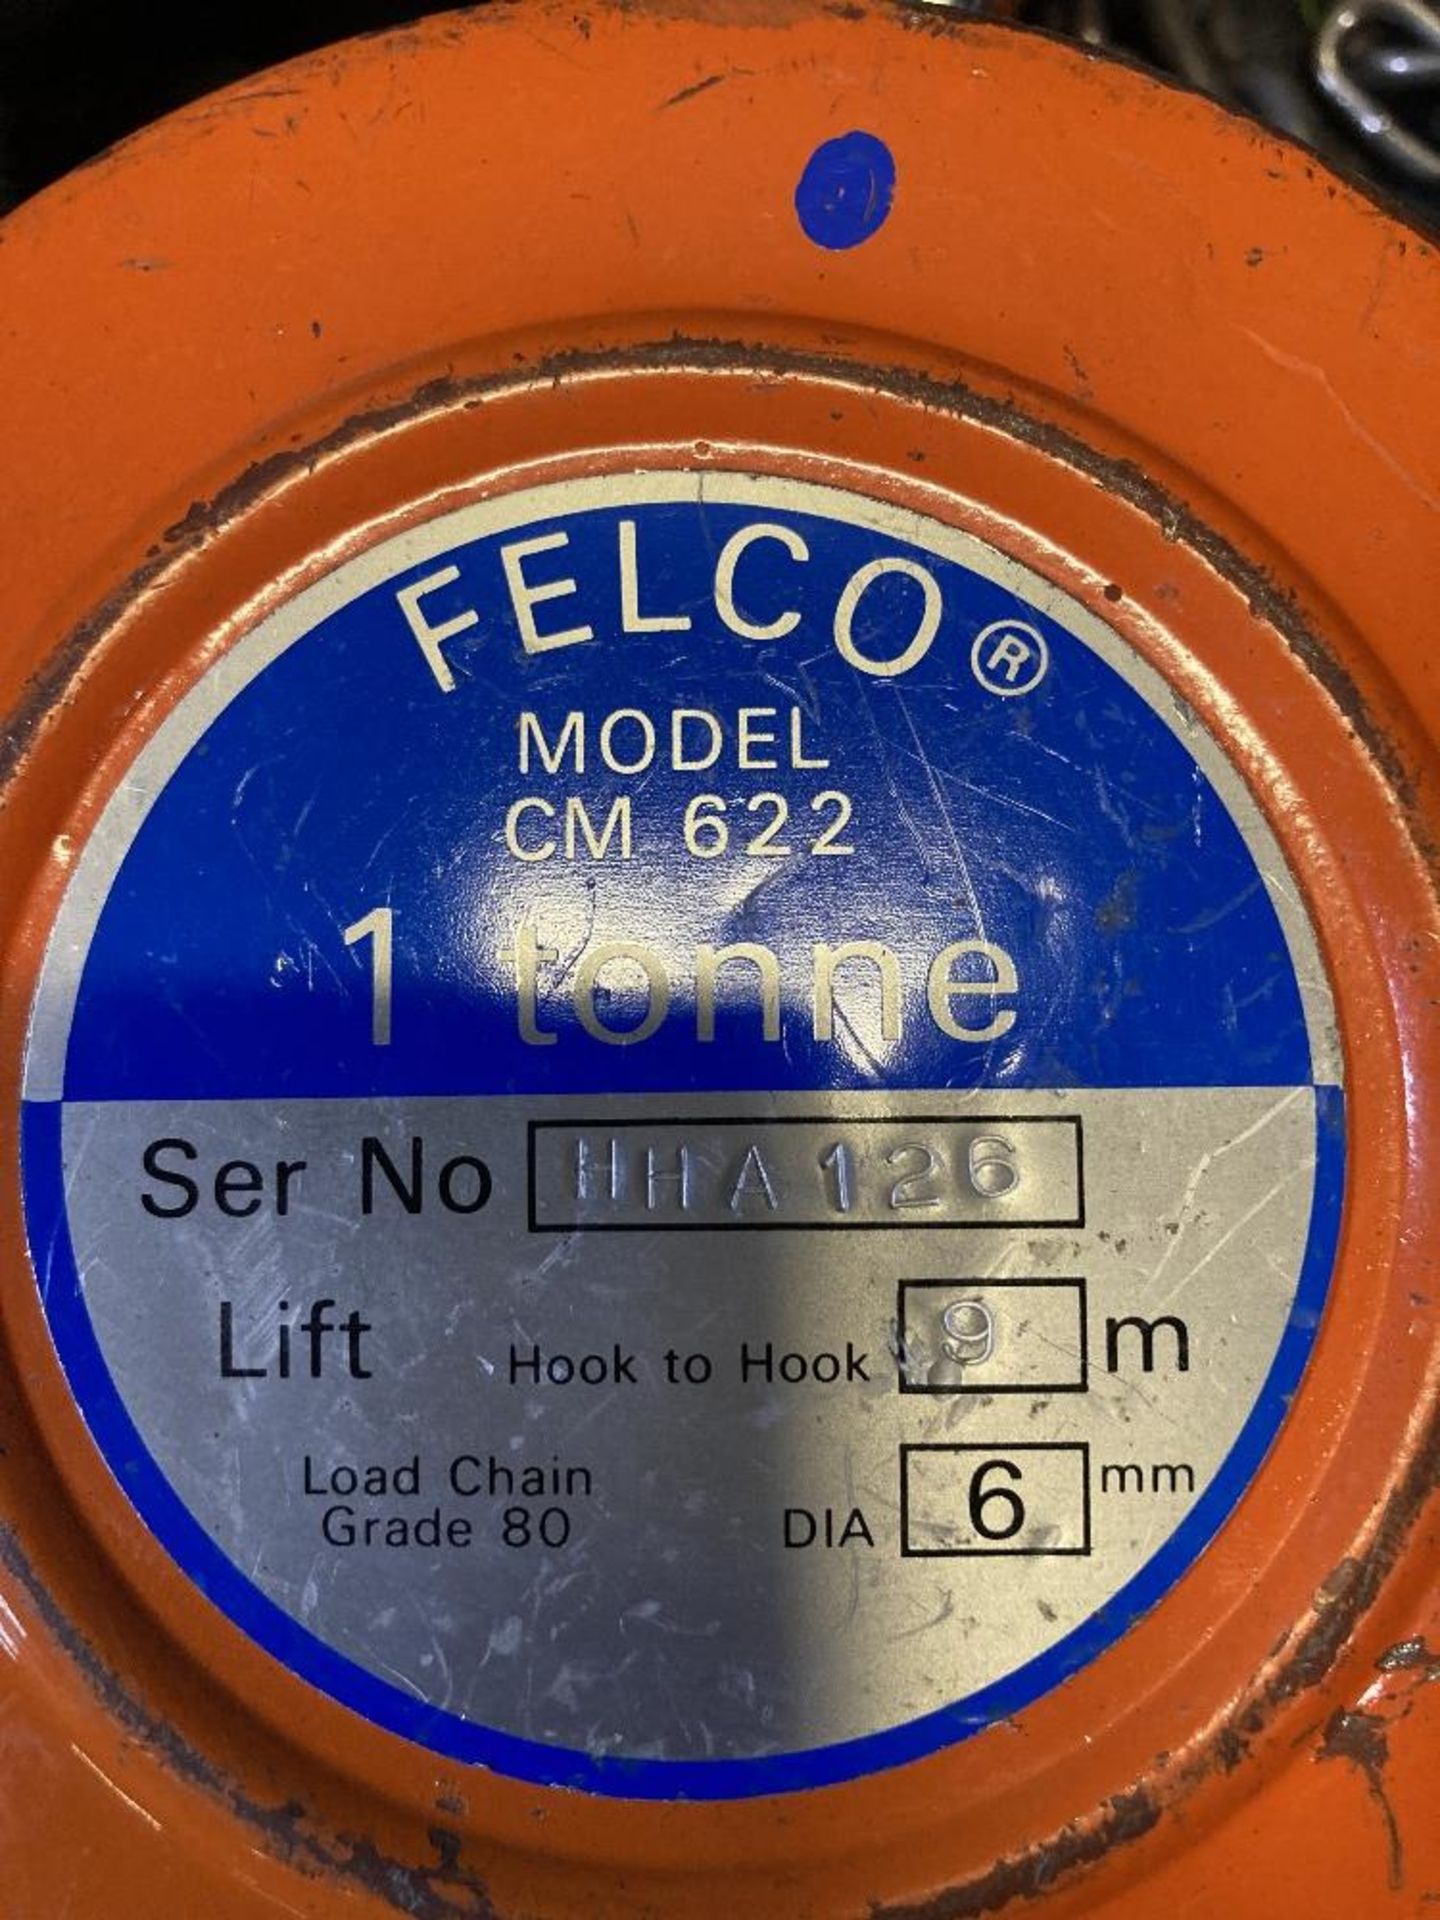 Felco CM622 1 Tonne 9 mtr Manual Hoist & Storage Bag - Image 4 of 6